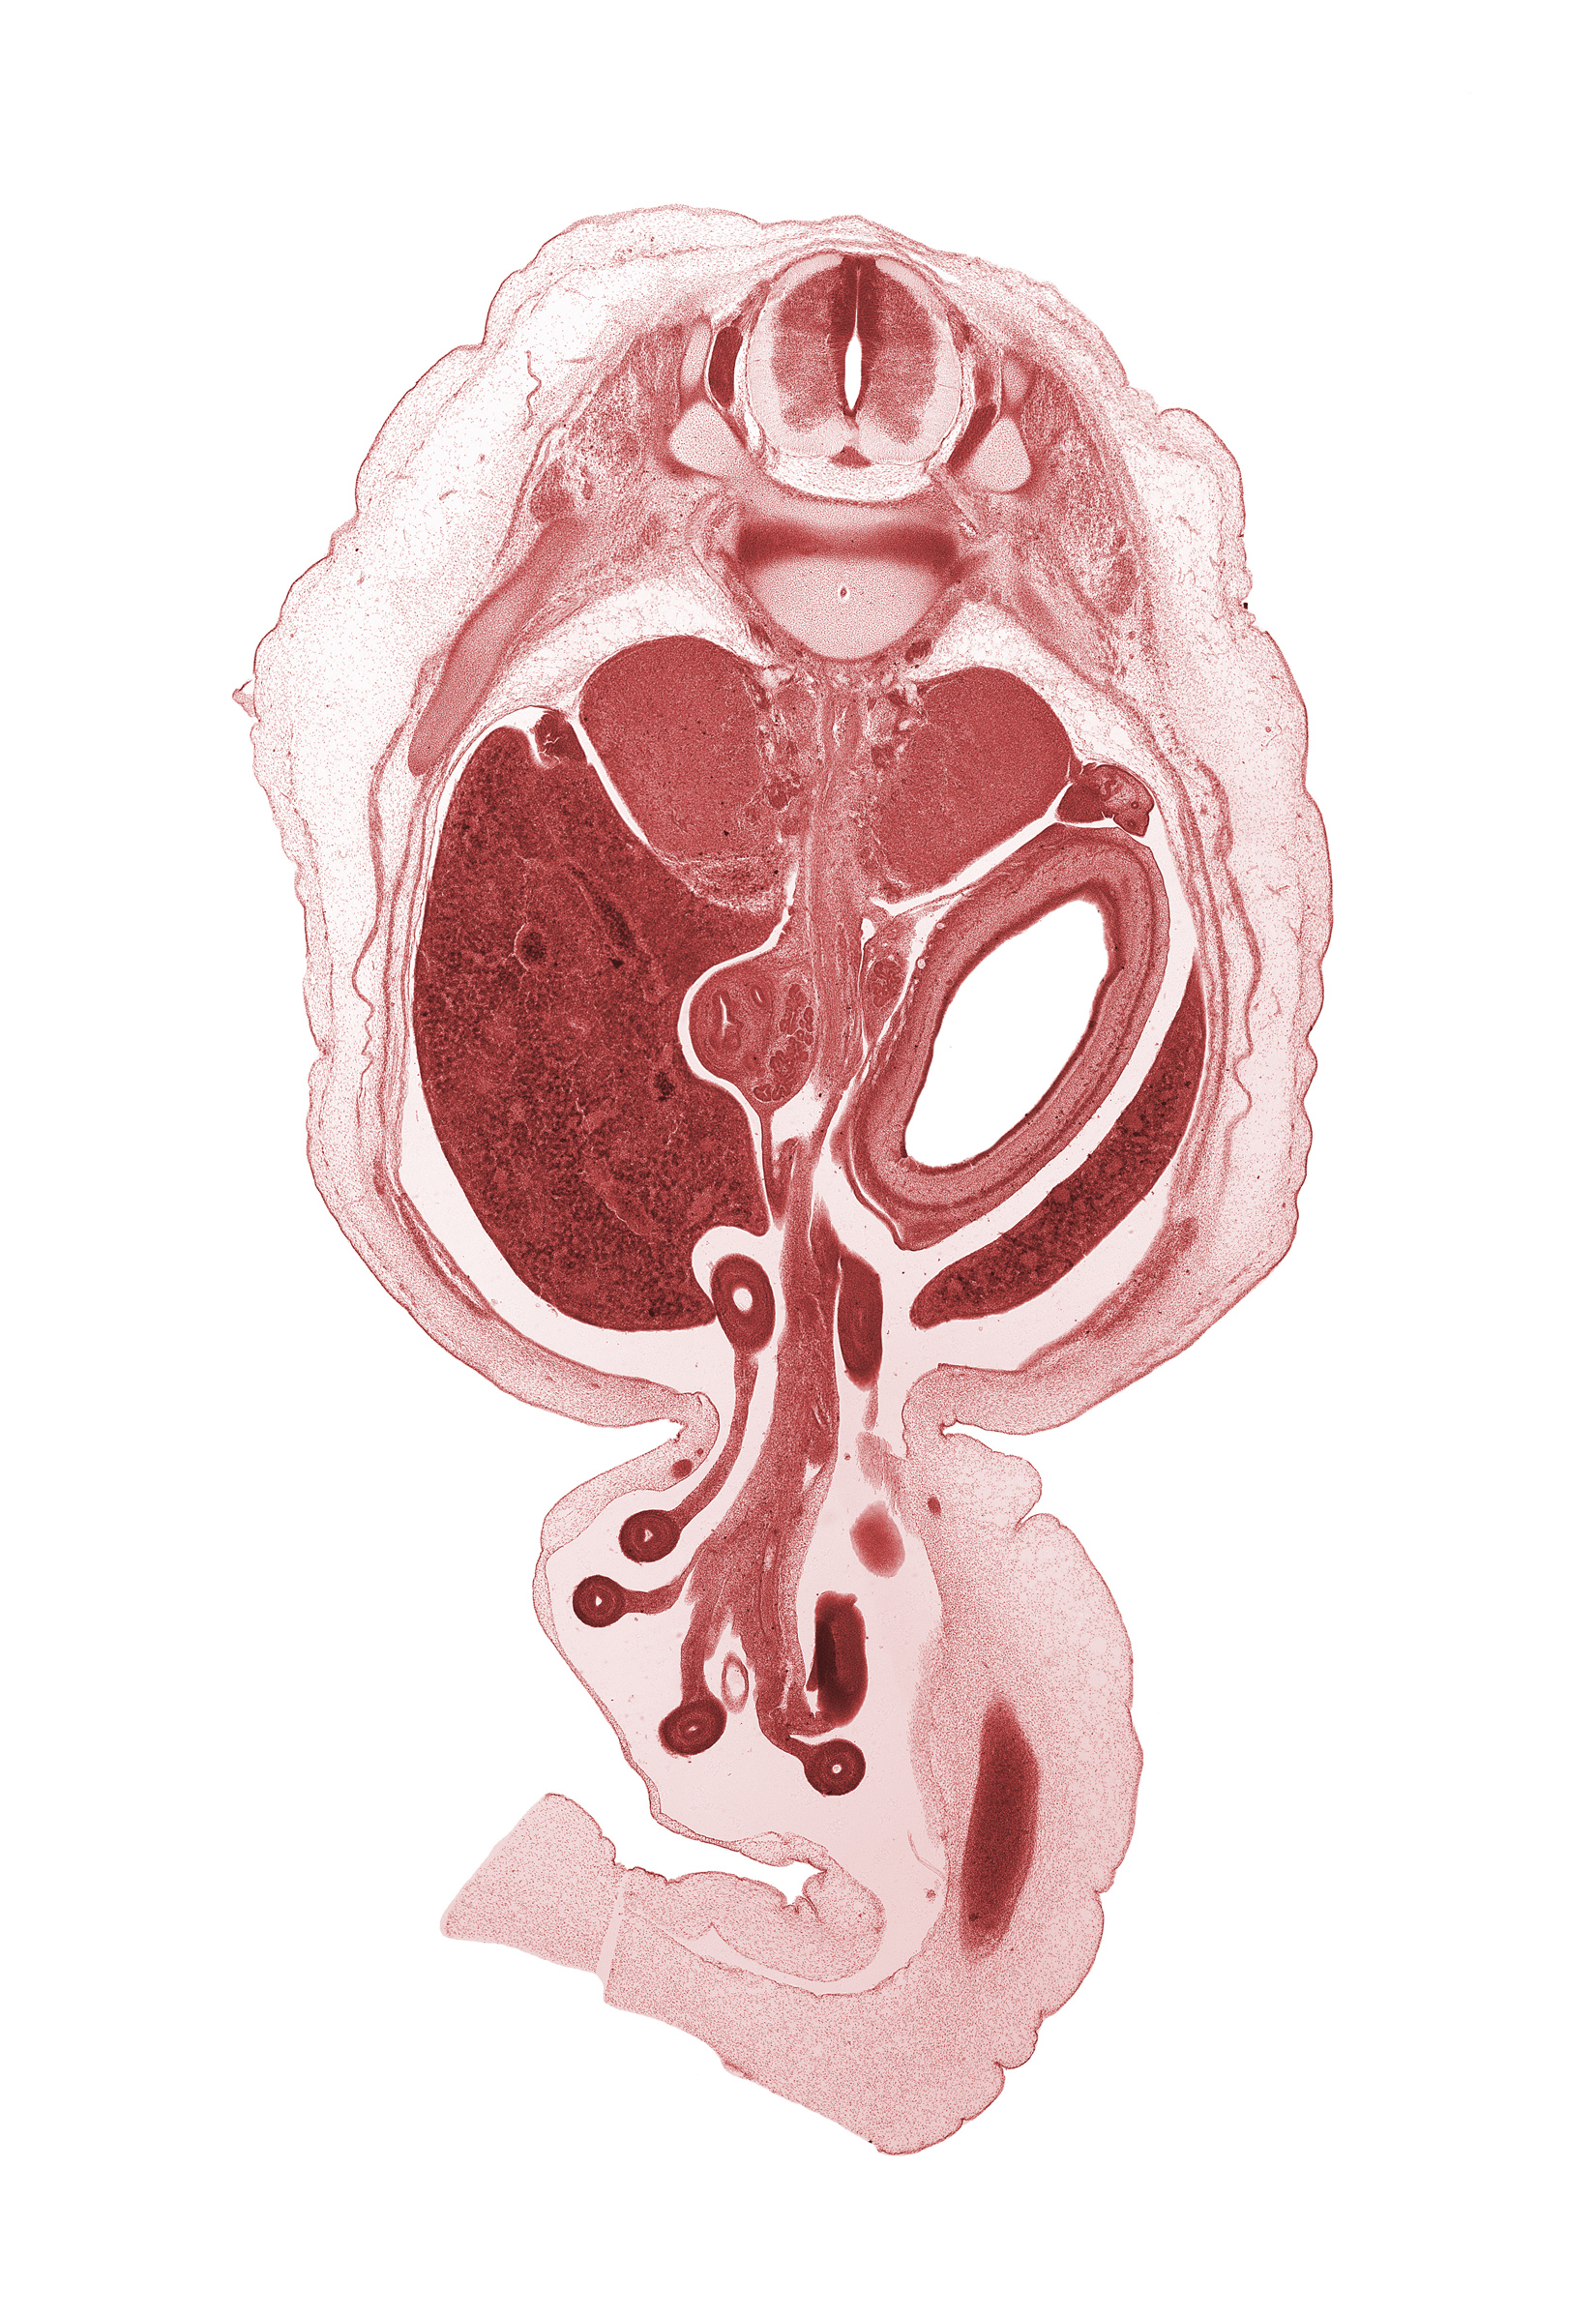 T-11 / T-12 intervertebral disc, T-11 spinal nerve, T-12 spinal ganglion, allantois, aorta, celiac ganglion, centrum of T-12 vertebra, descending part of duodenum (second part), distal limb of herniated midgut, greater curvature of stomach, head of ventral pancreas, hindgut (colon), jejunum, proximal limb of herniated midgut, rectus abdominis muscle, spleen, testis, umbilical vein